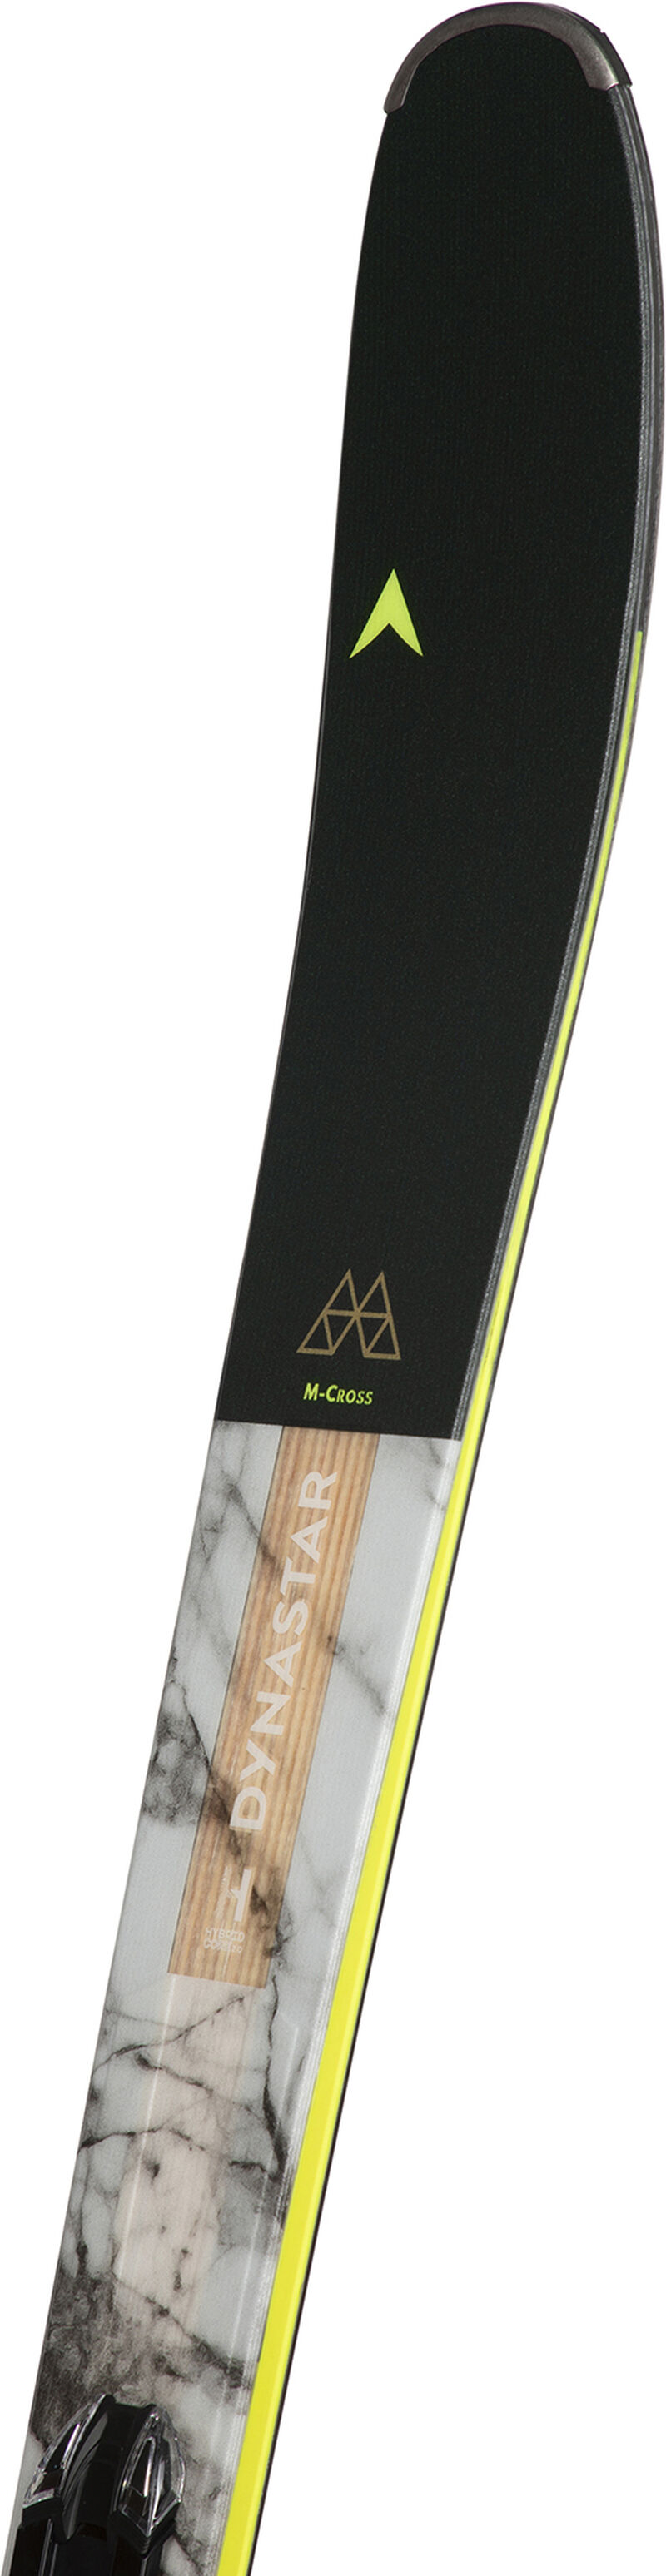 Skis all mountain unisexe M-Cross 82 Konect